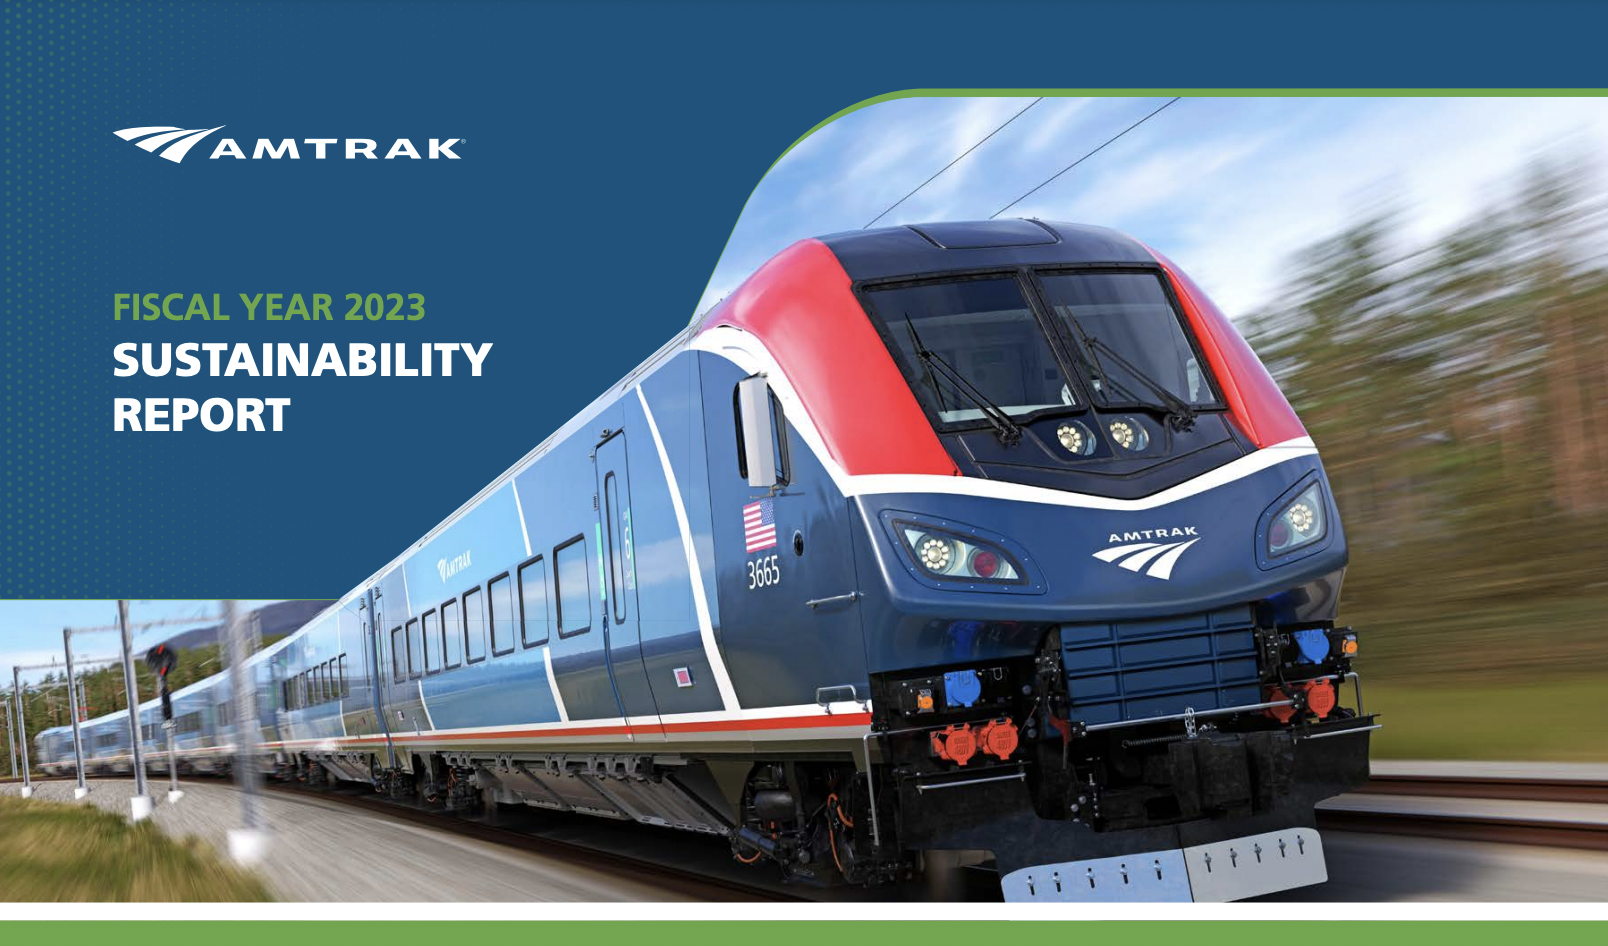 Amtrak’s FY 2023 Sustainability Report